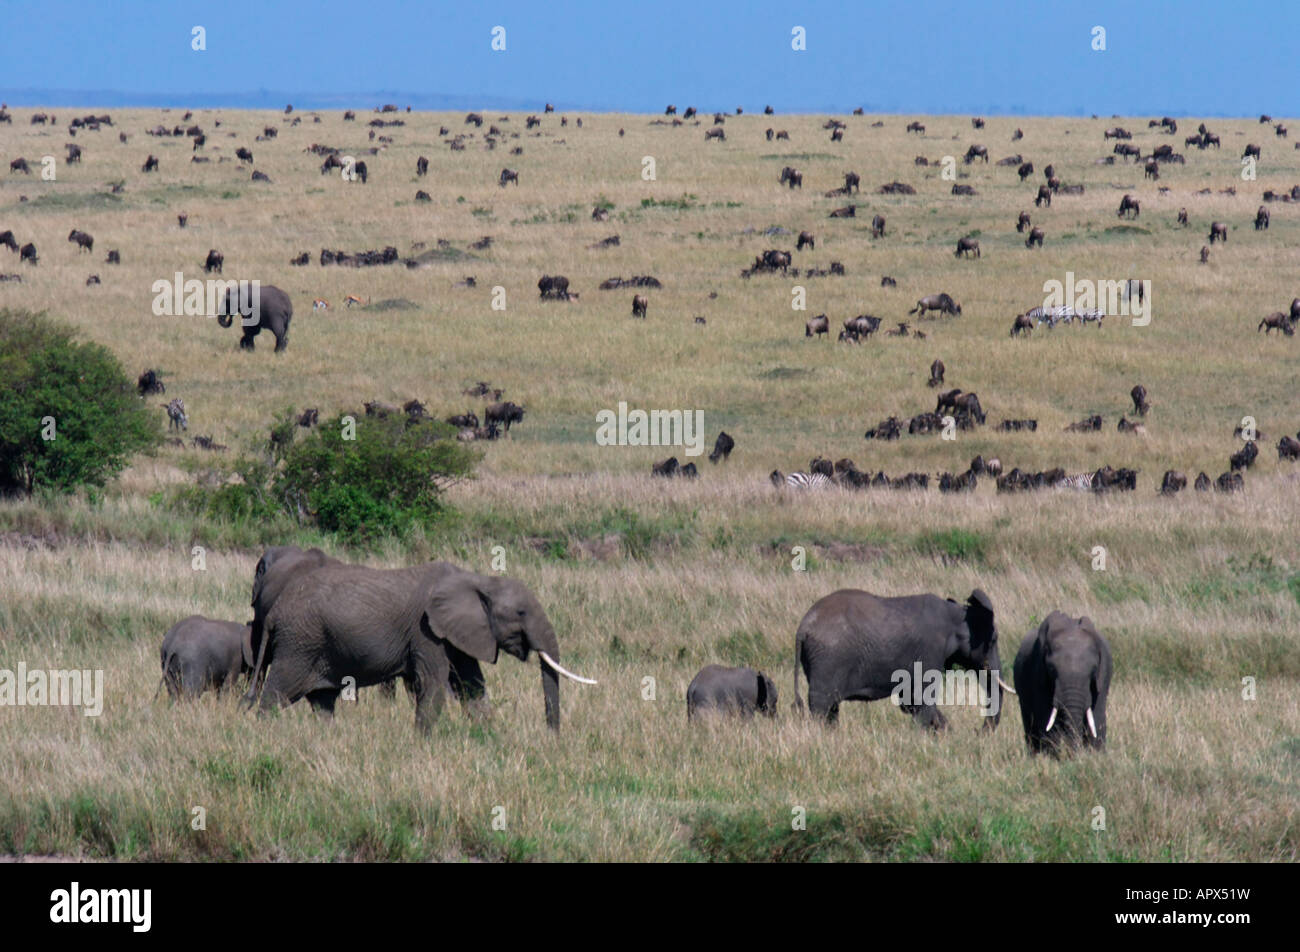 Breeding herd of elephant scattered amongst Wildebeest grazing on the open grassy plains of the Masaai Mara Stock Photo